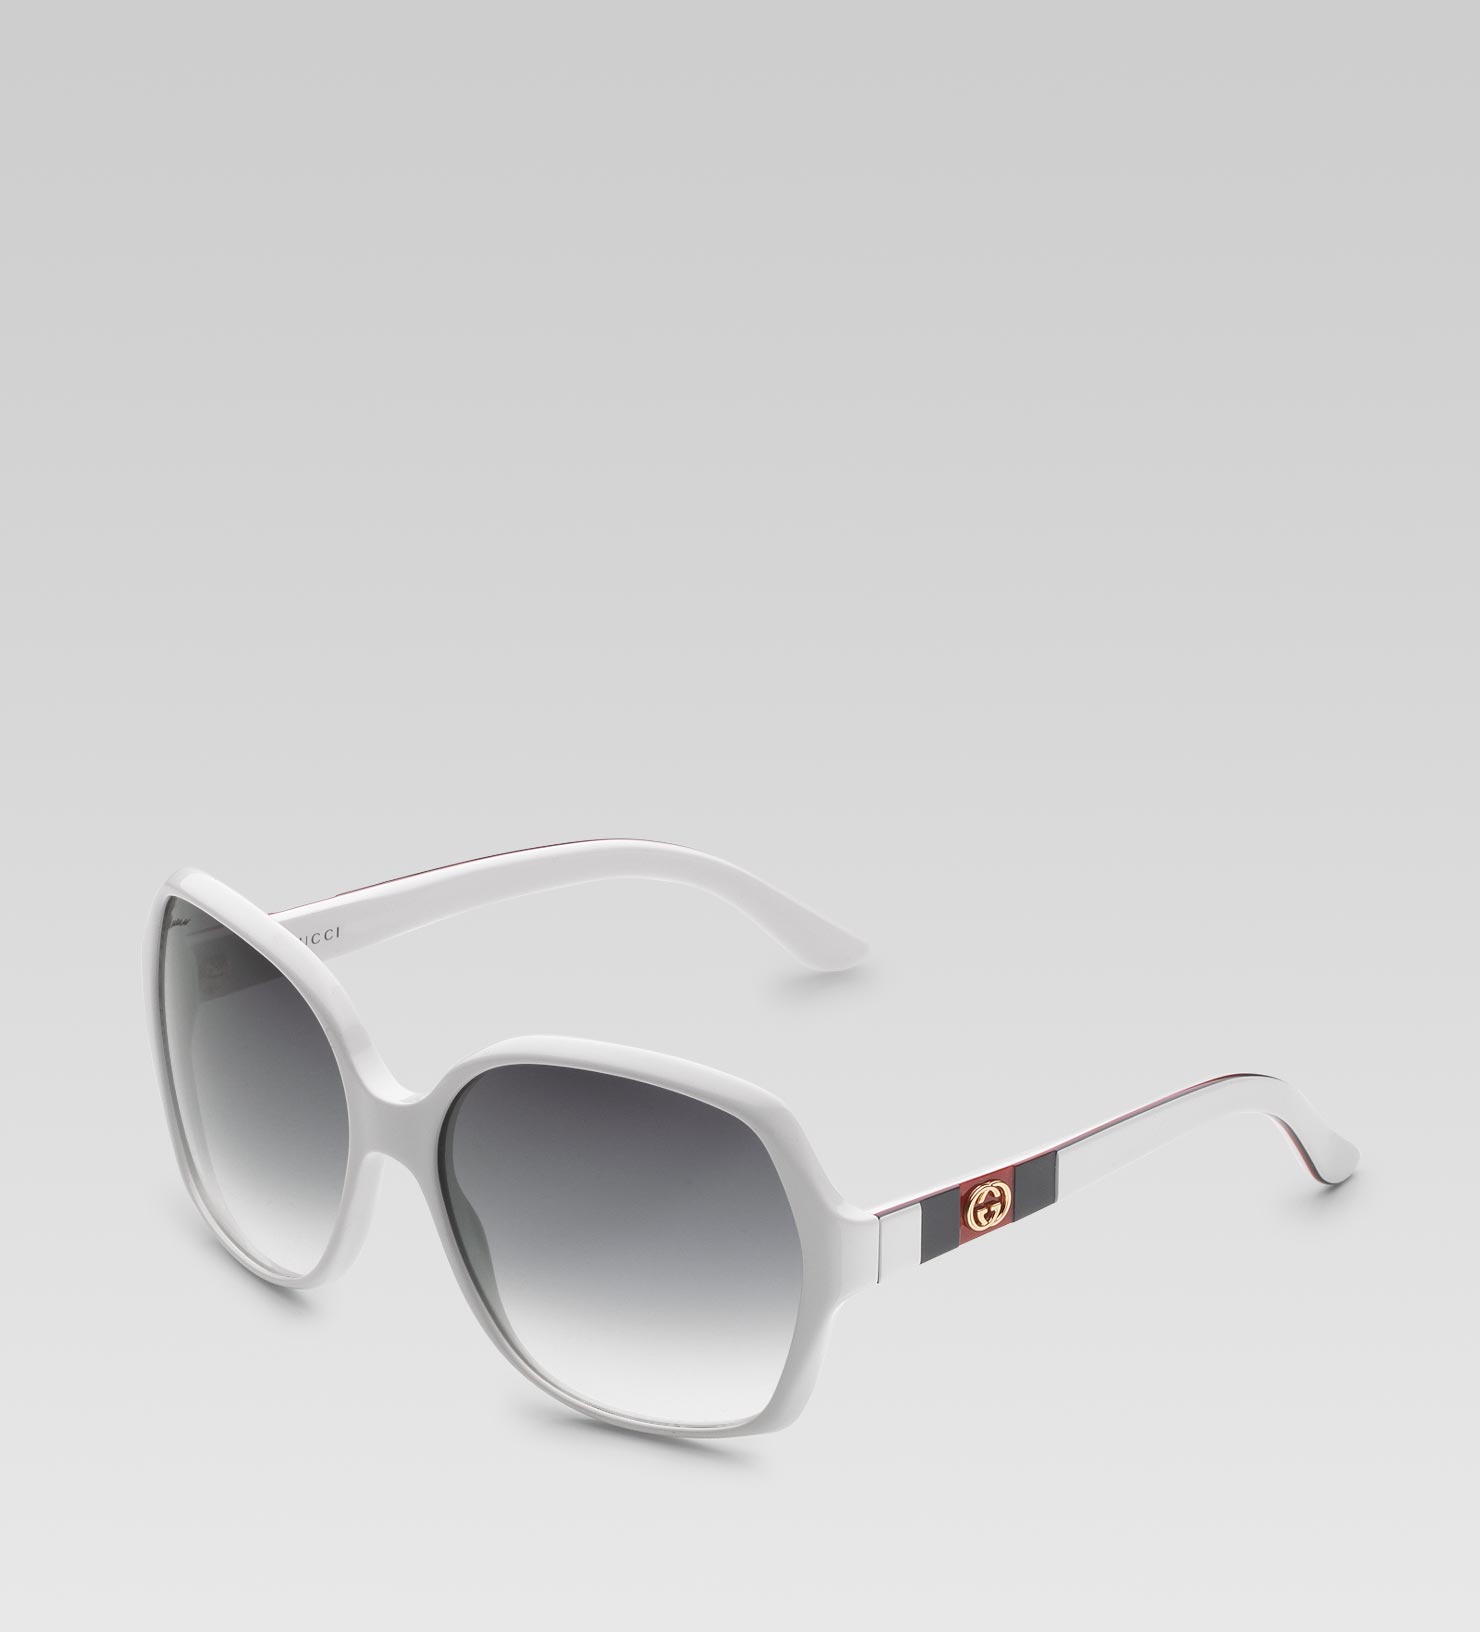 gucci white frame glasses, OFF 76%,Buy!